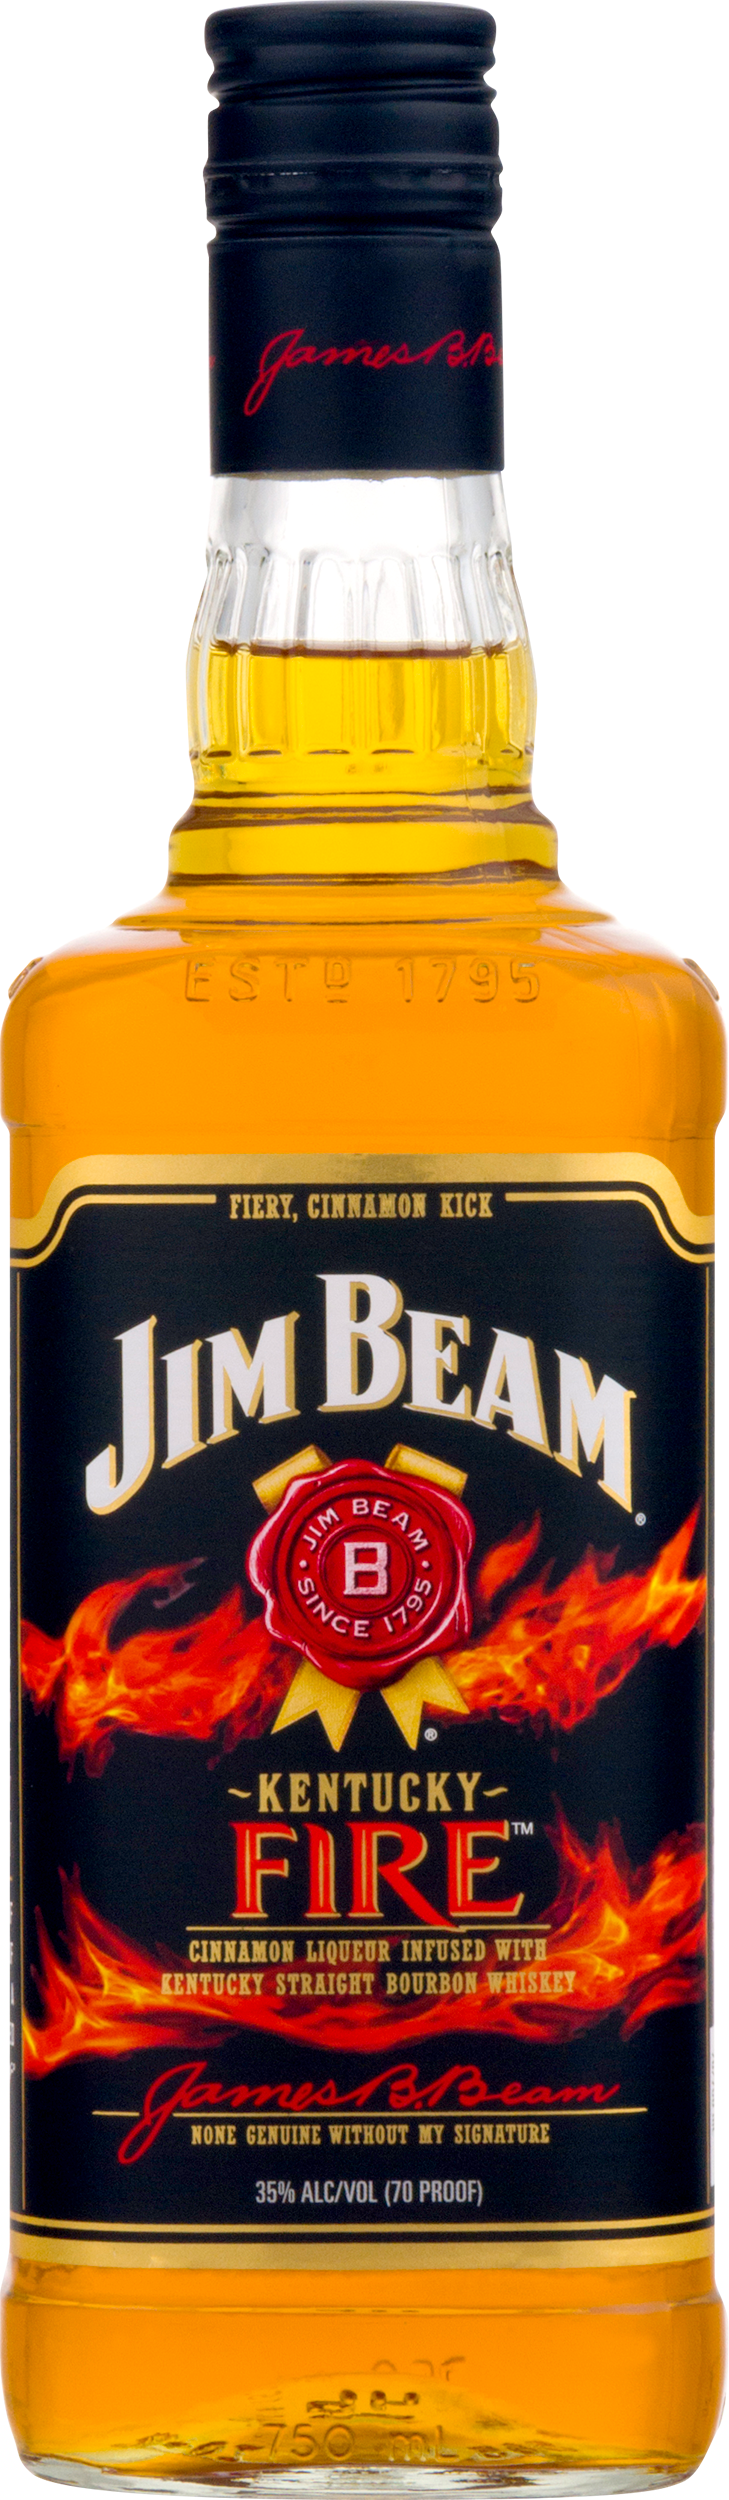 Jim Beam Kentucky Fire Bourbon Whiskey - 750ml Bottle